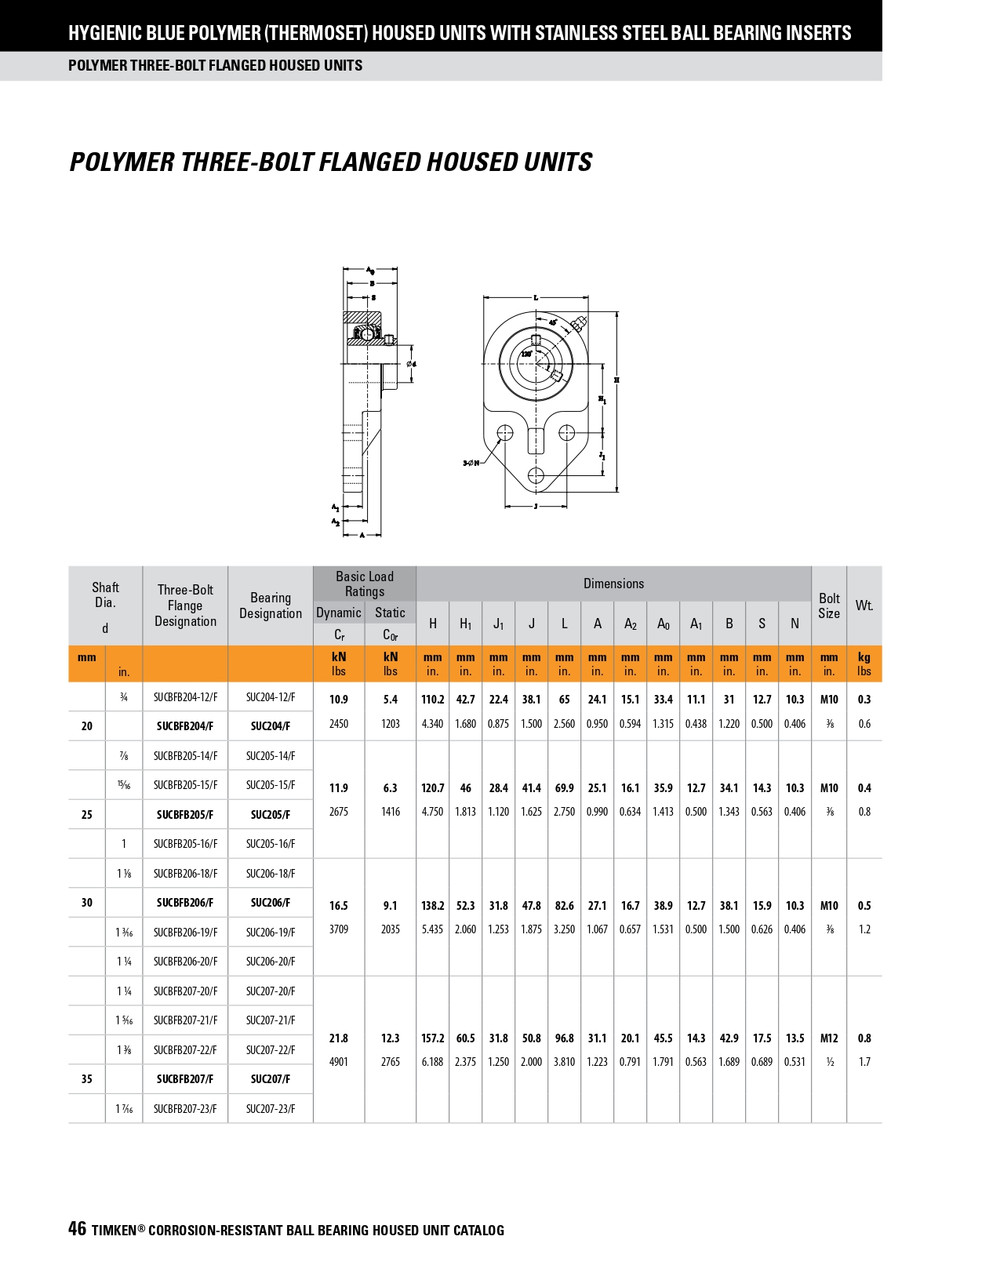 1-7/16" Hygienic Polymer Set Screw Three-Bolt Flange Block Assembly   SUCBFB207-23/FVSL613